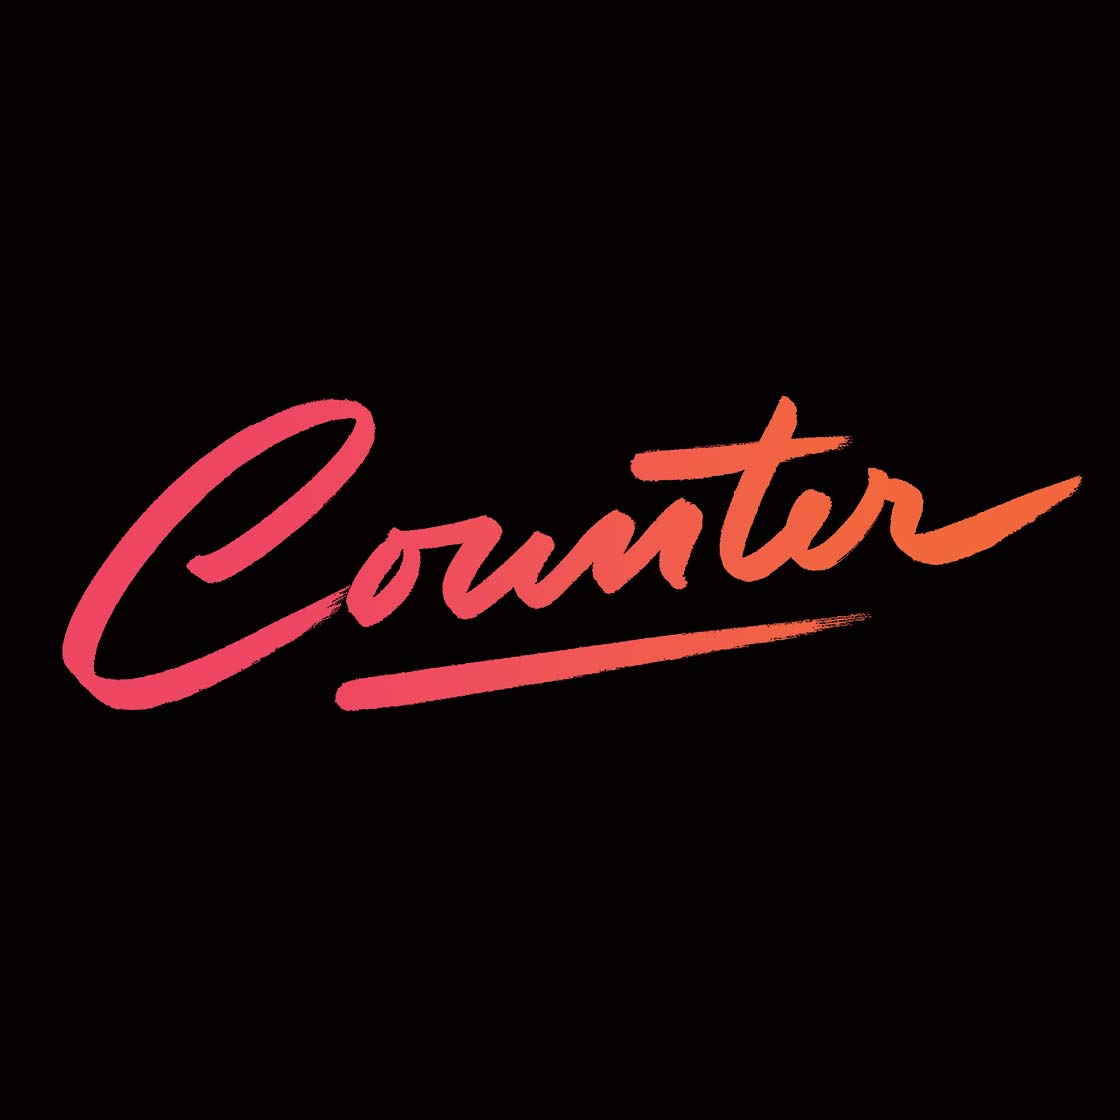 Counter logo 80s eighties Martina Flor